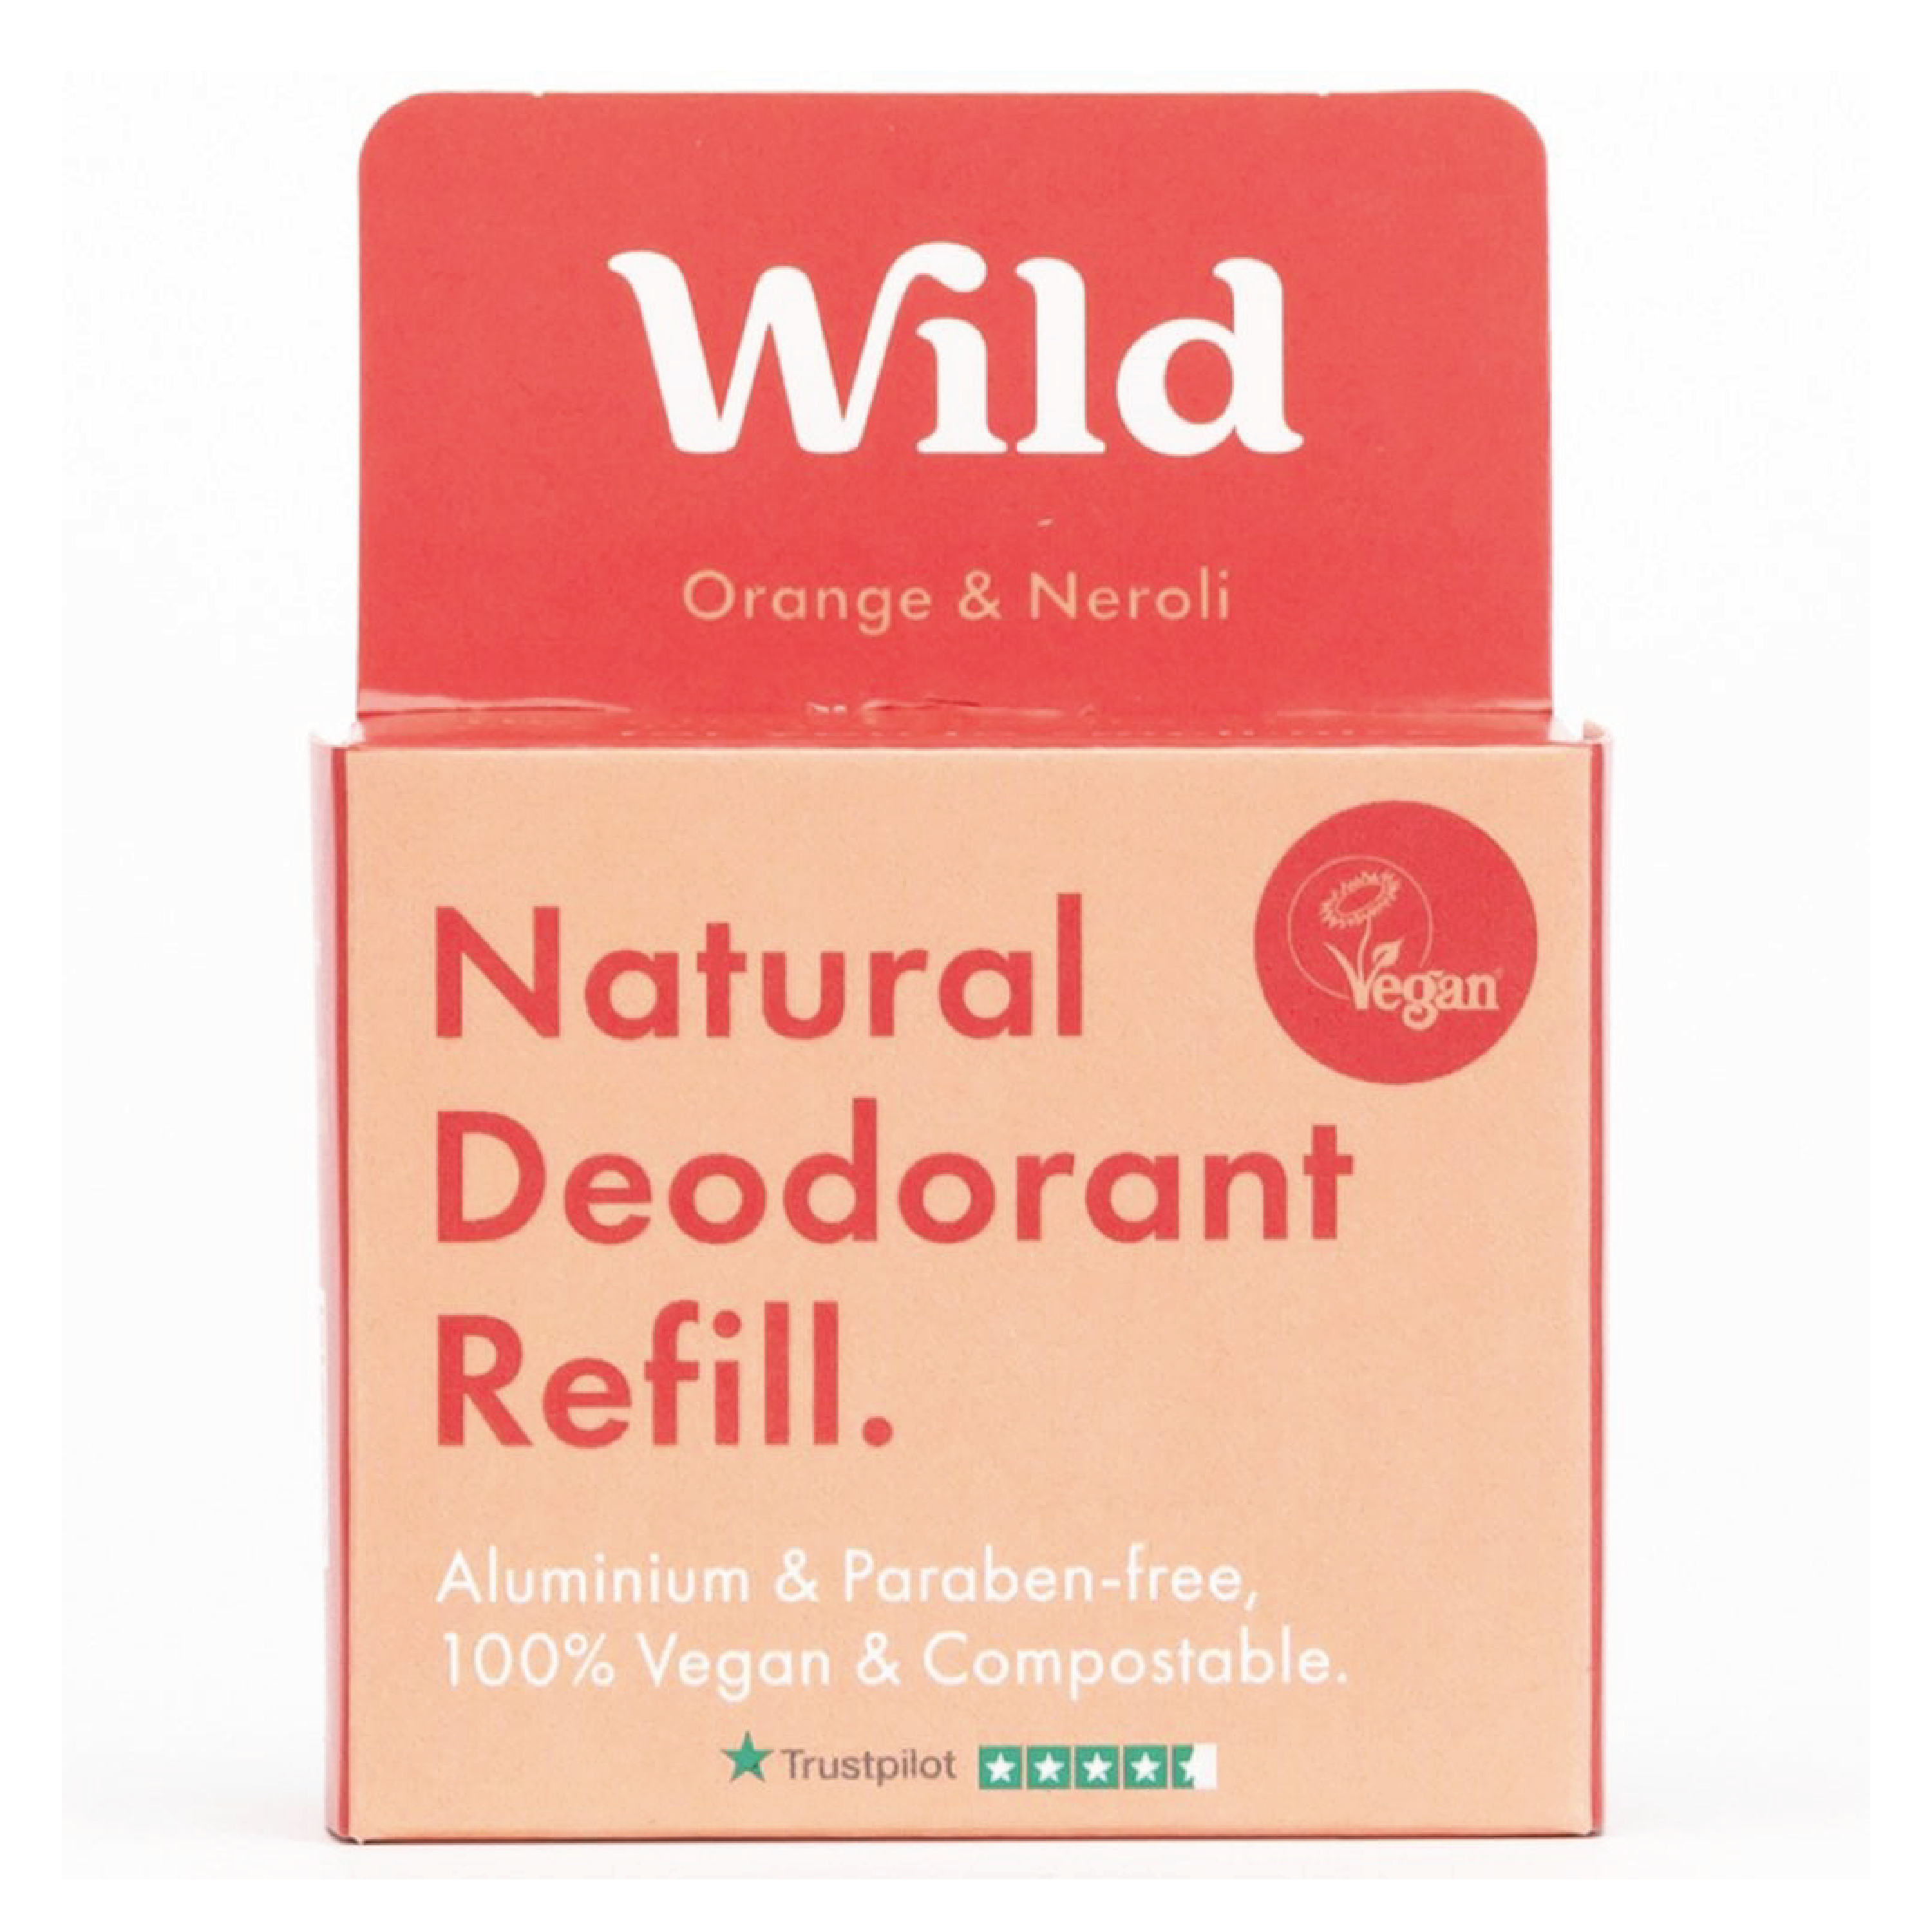 Wild Wild Deo Orange & Neroli Refill, 40 g